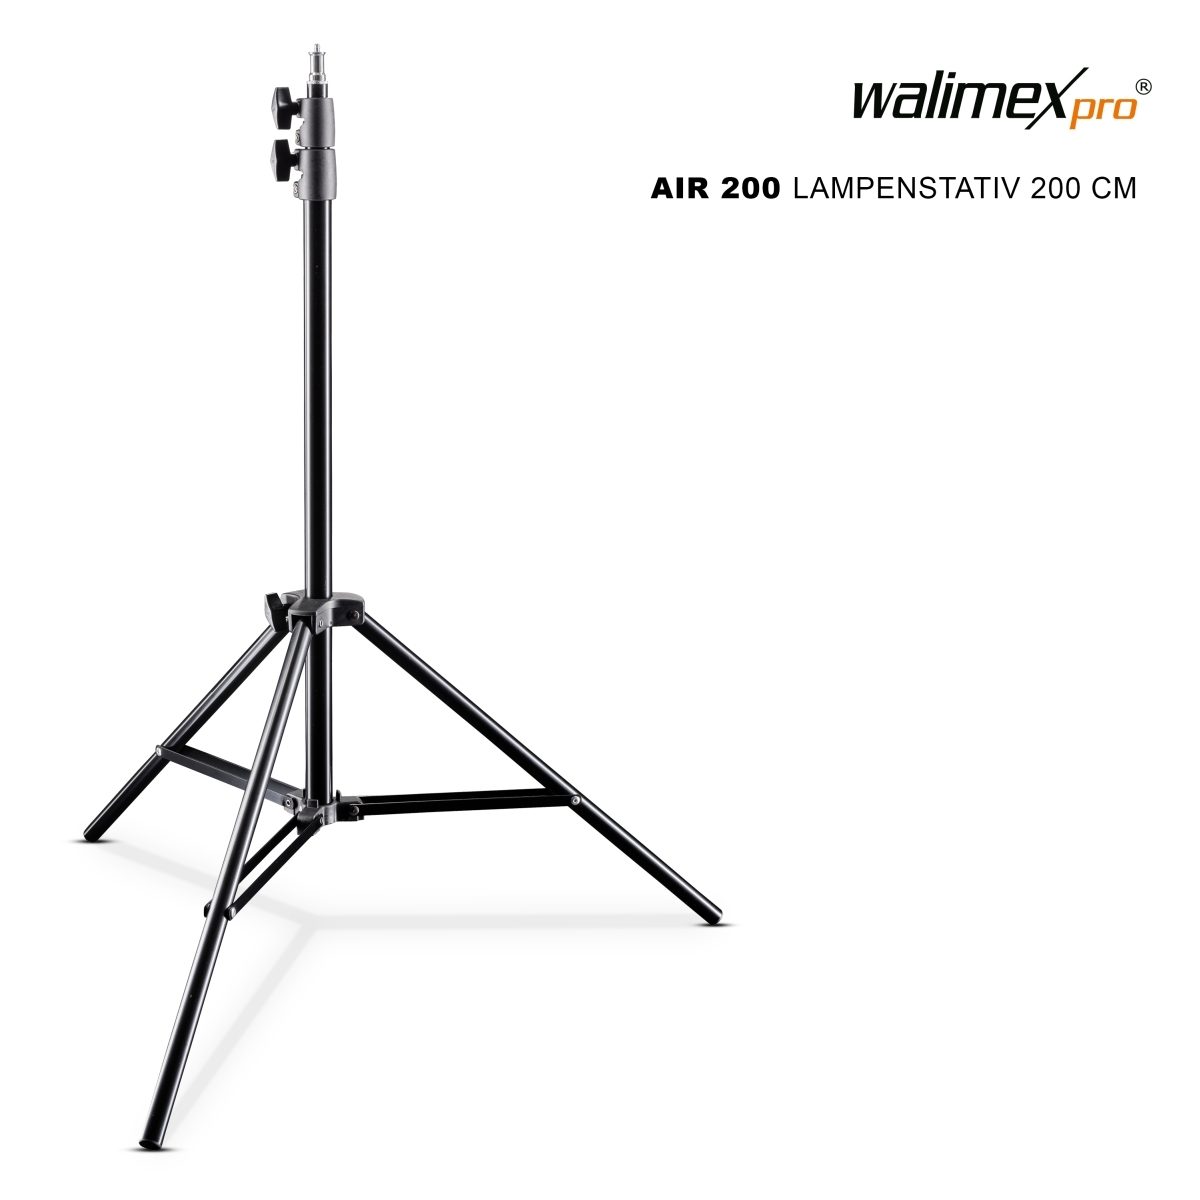 Walimex Lamp Tripod, 200cm